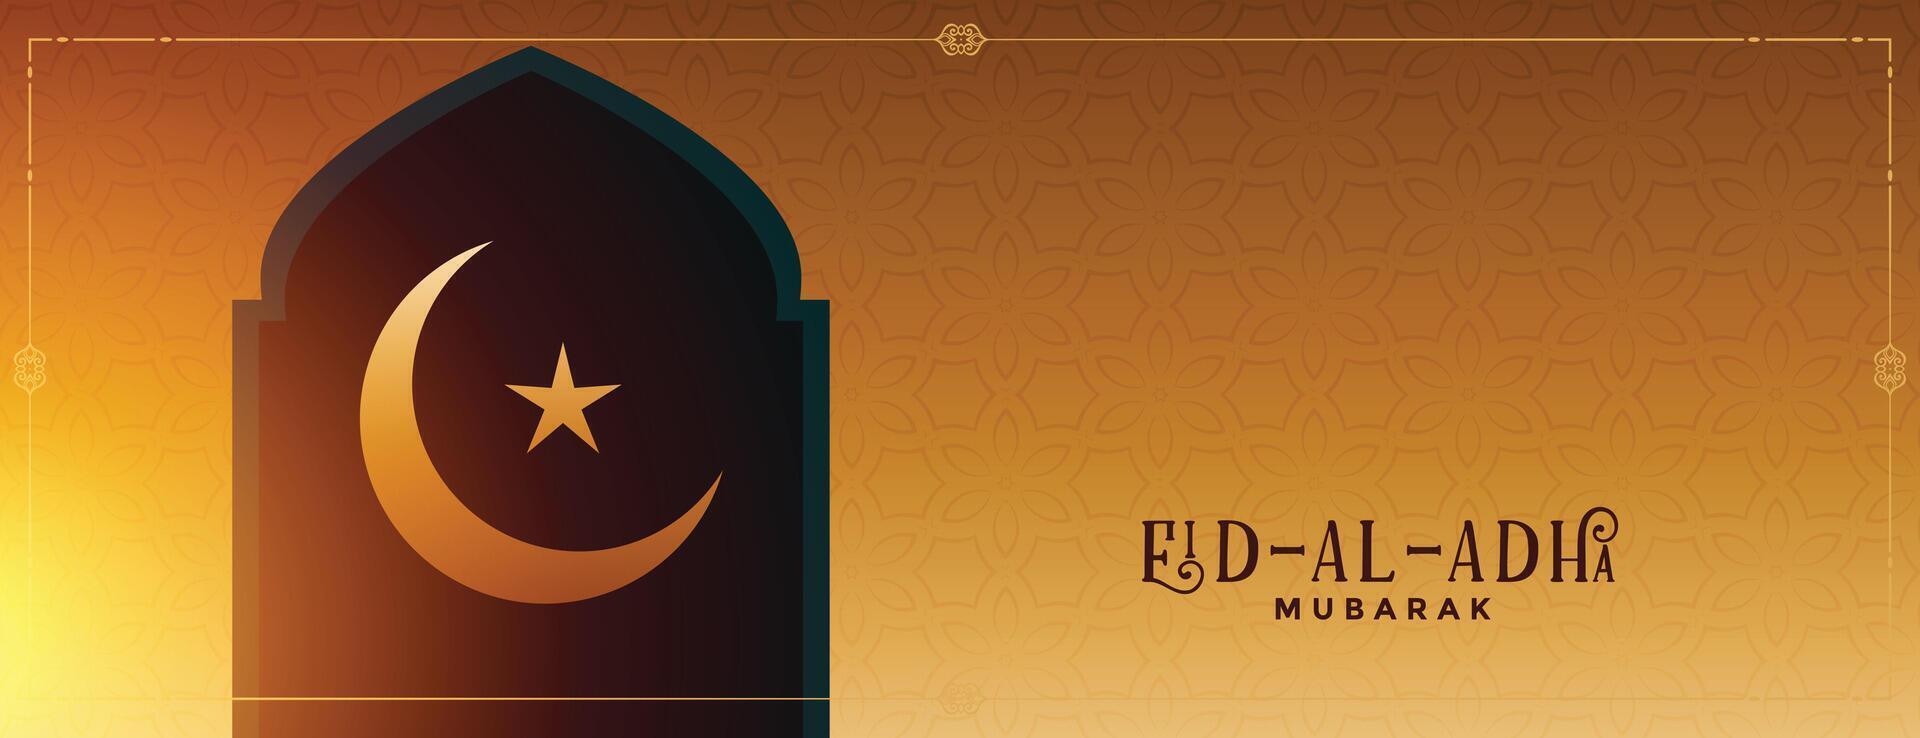 eid al adha islamic festival wishes banner design vector